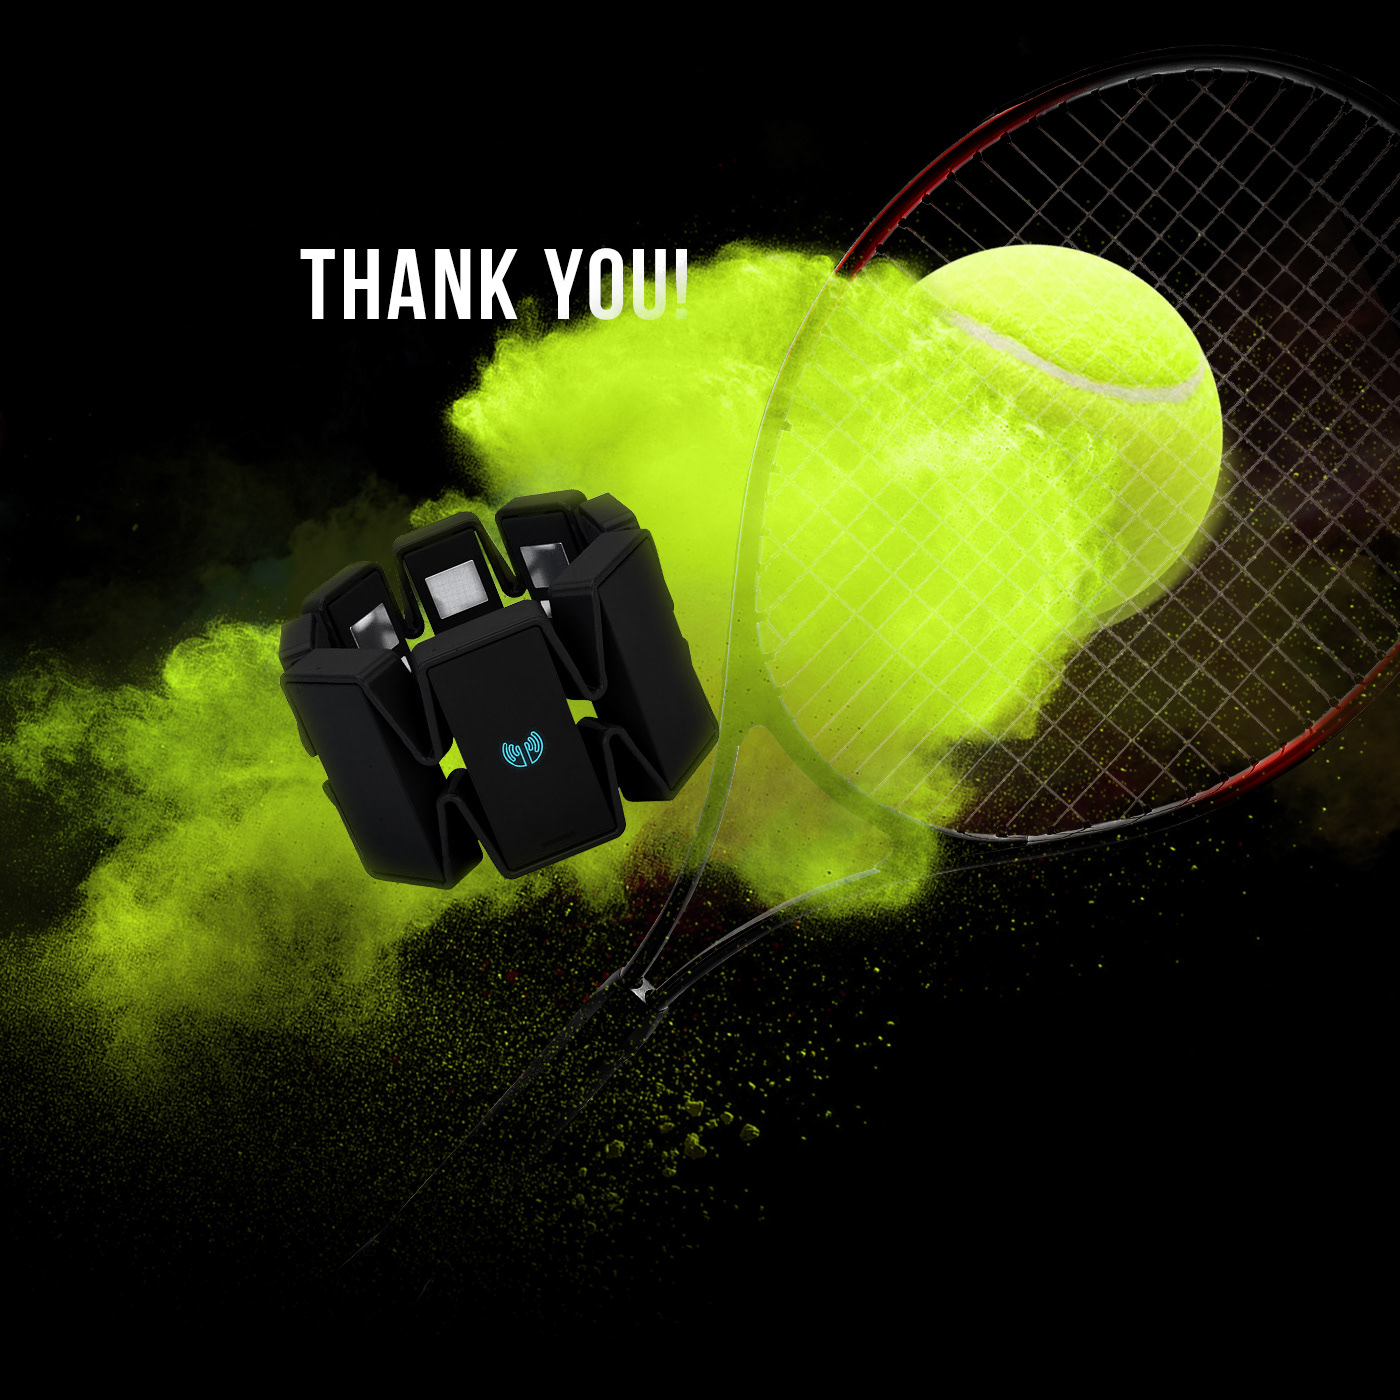 digital Experience game interactive sport Technology tennis myo paribas wimbledon